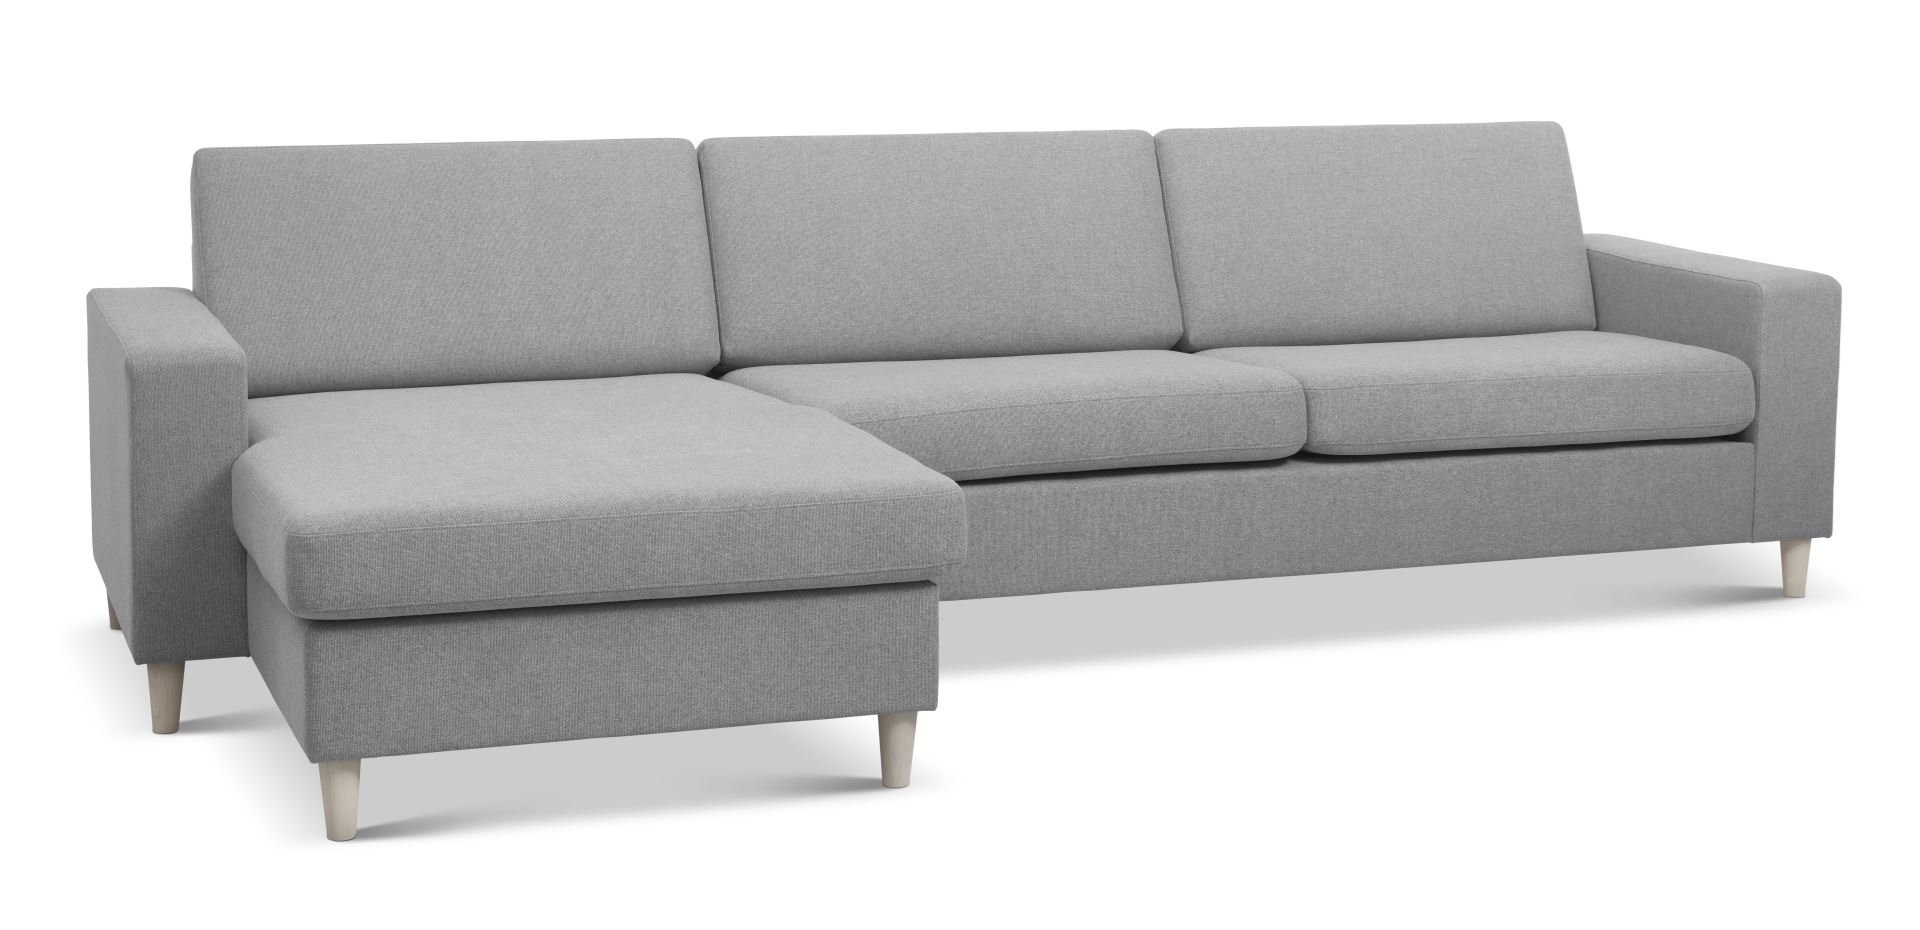 Pan set 8 3D XL sofa, m. chaiselong - grå polyester stof og natur træ